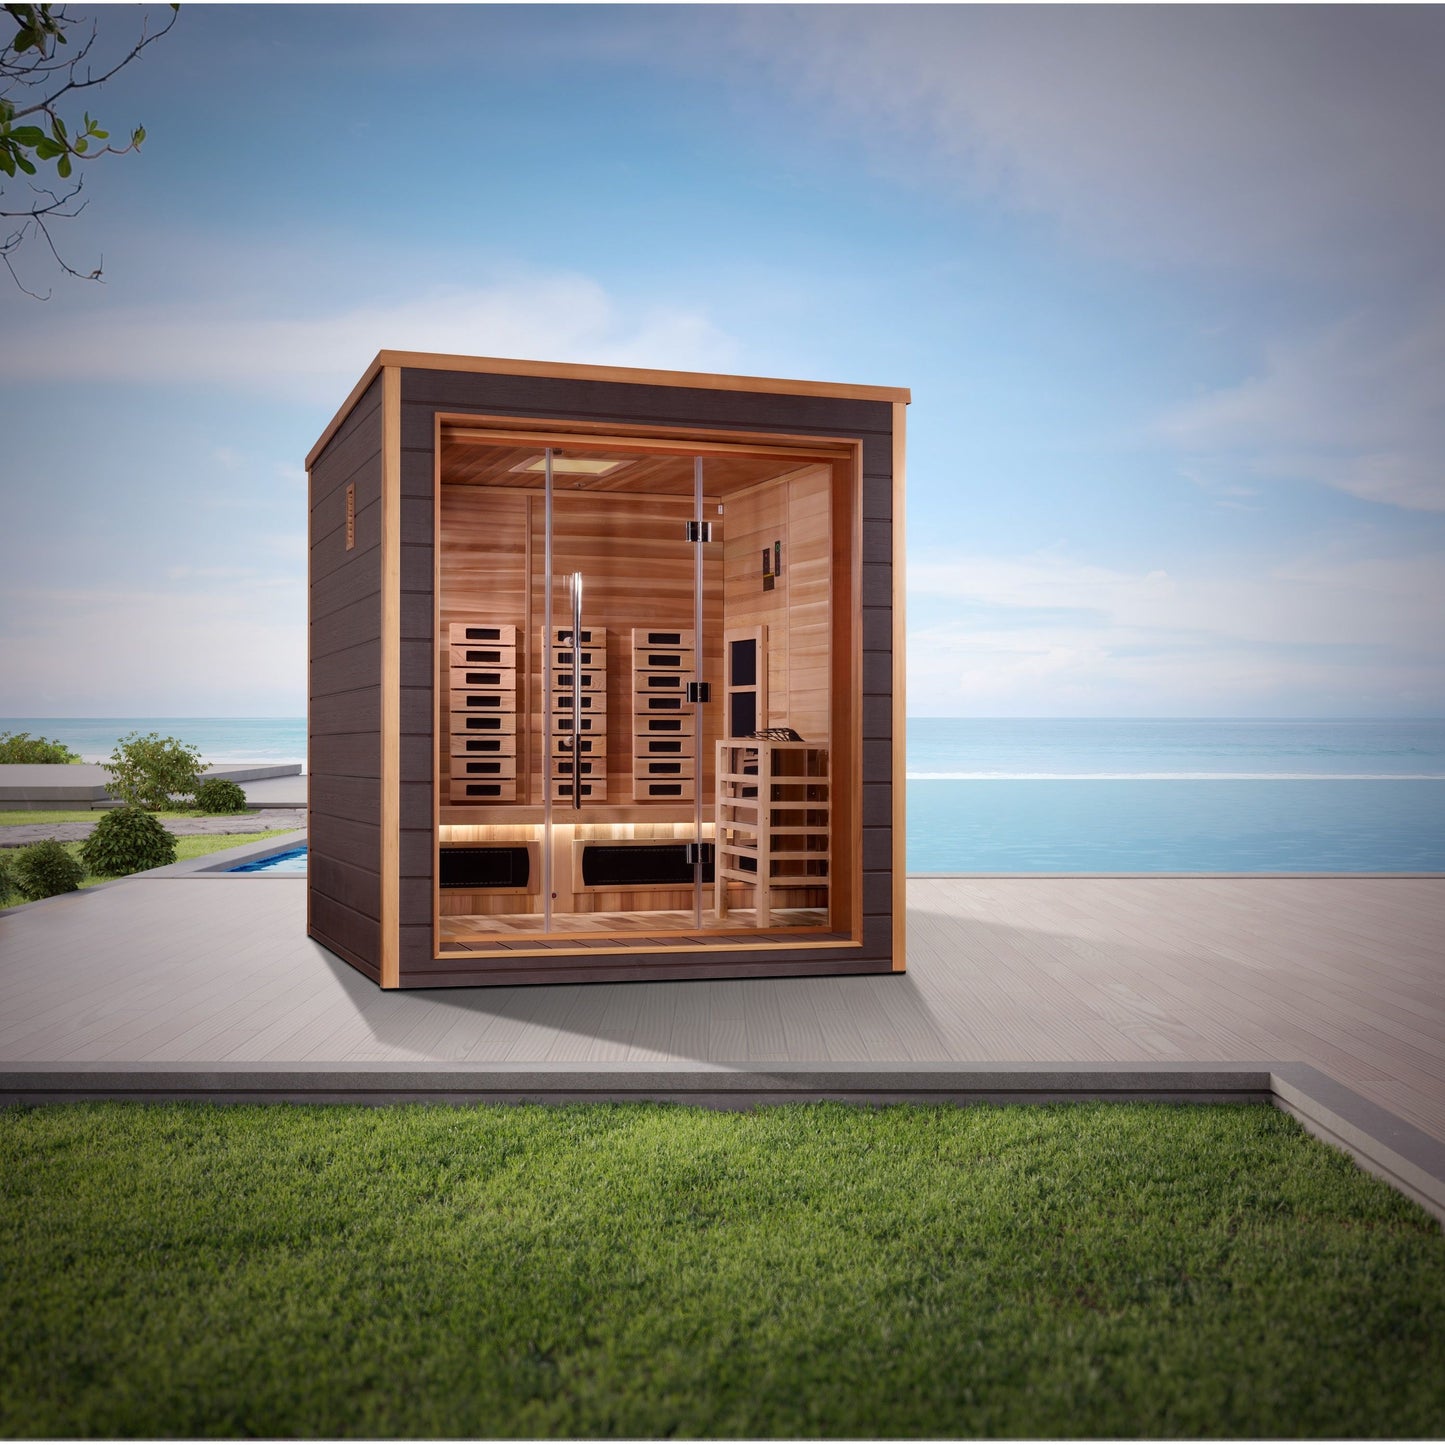 Golden Designs Visby 3 Person Outdoor-Indoor PureTech™ Hybrid Full Spectrum Sauna - Canadian Red Cedar Interior